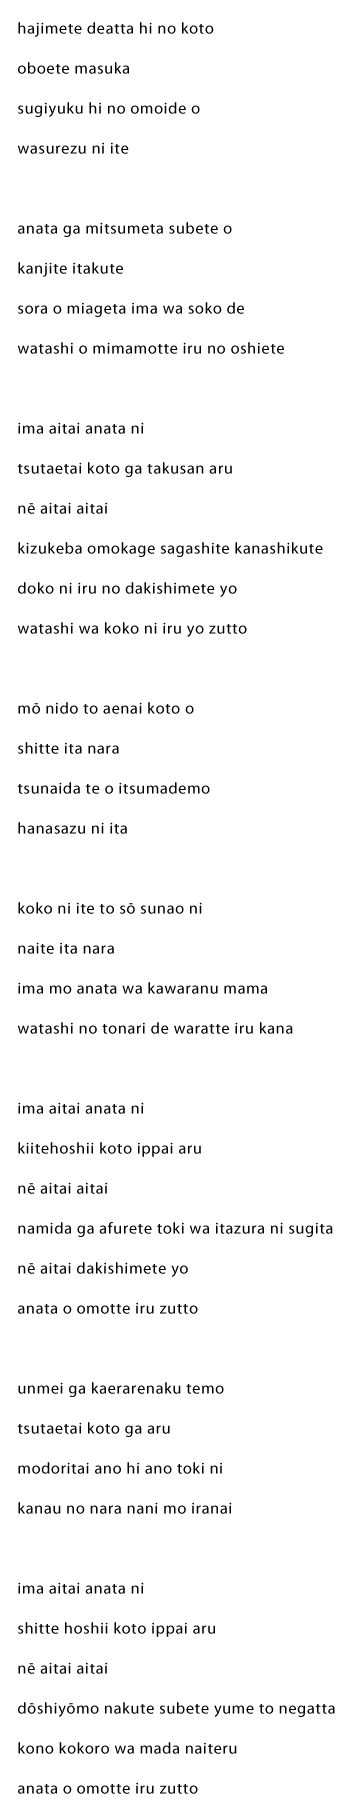 Watashi Lyrics - Kamiyui Isaji (Original Soundtrack) - Only on